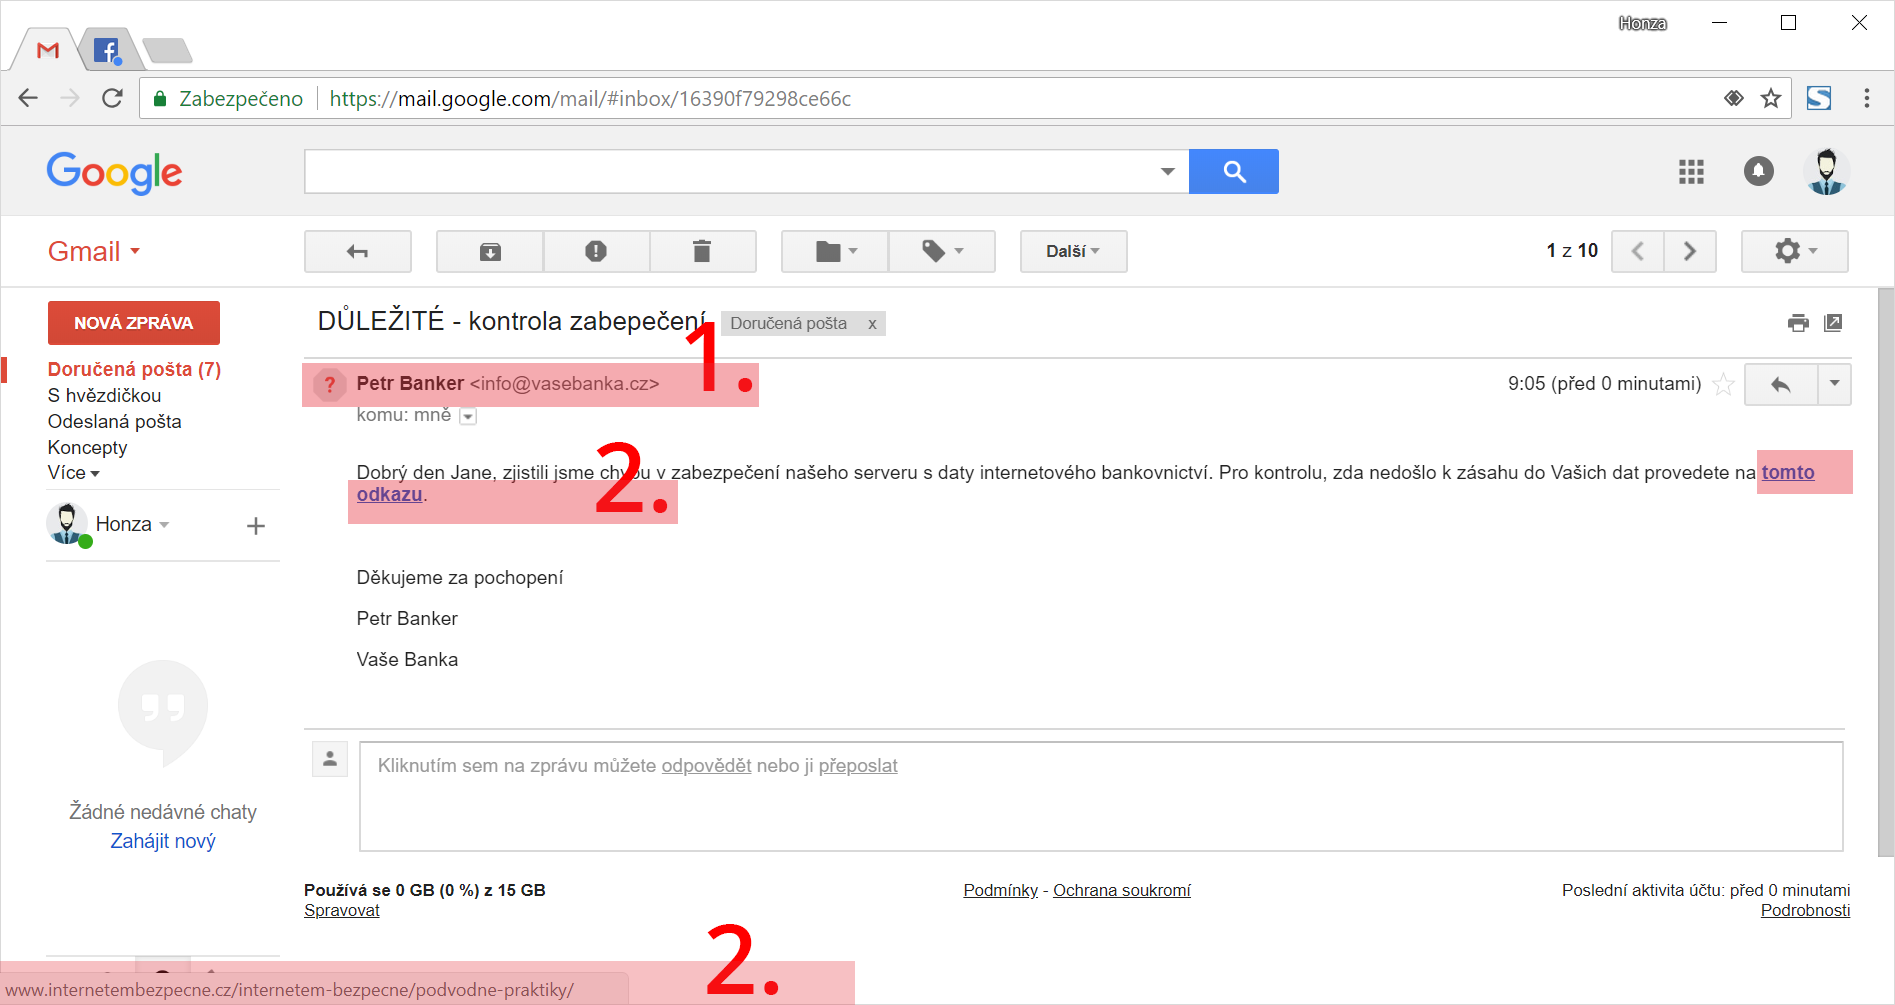 Ako si spravit v gmaili s pozdravom